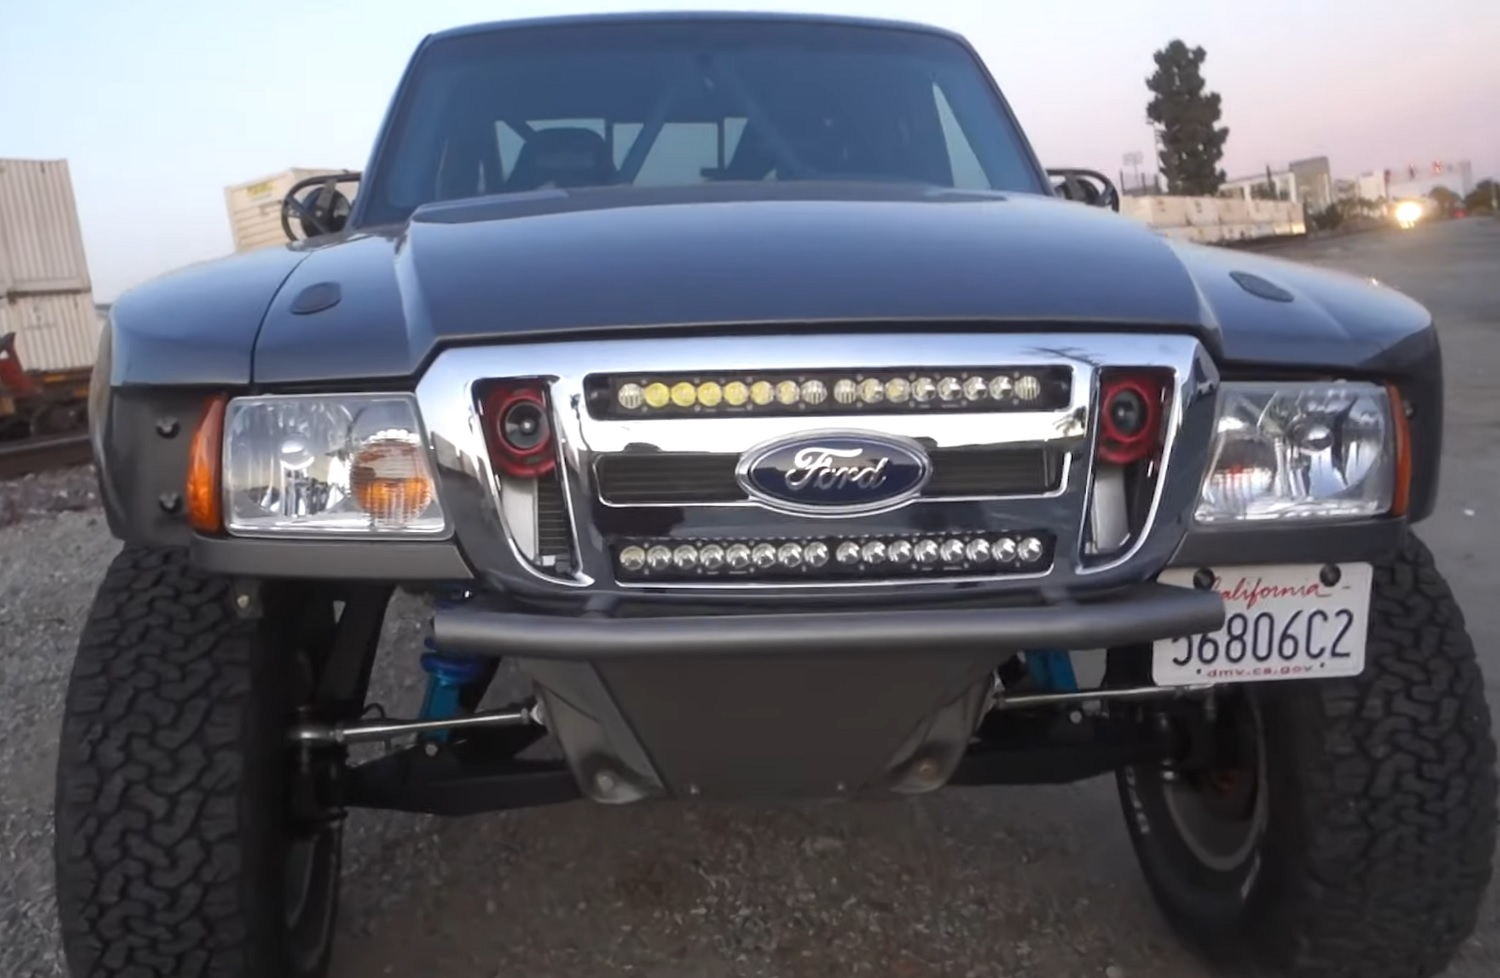 2005 Ford Ranger Prerunner Built To Dominate Streets And Deserts: Video